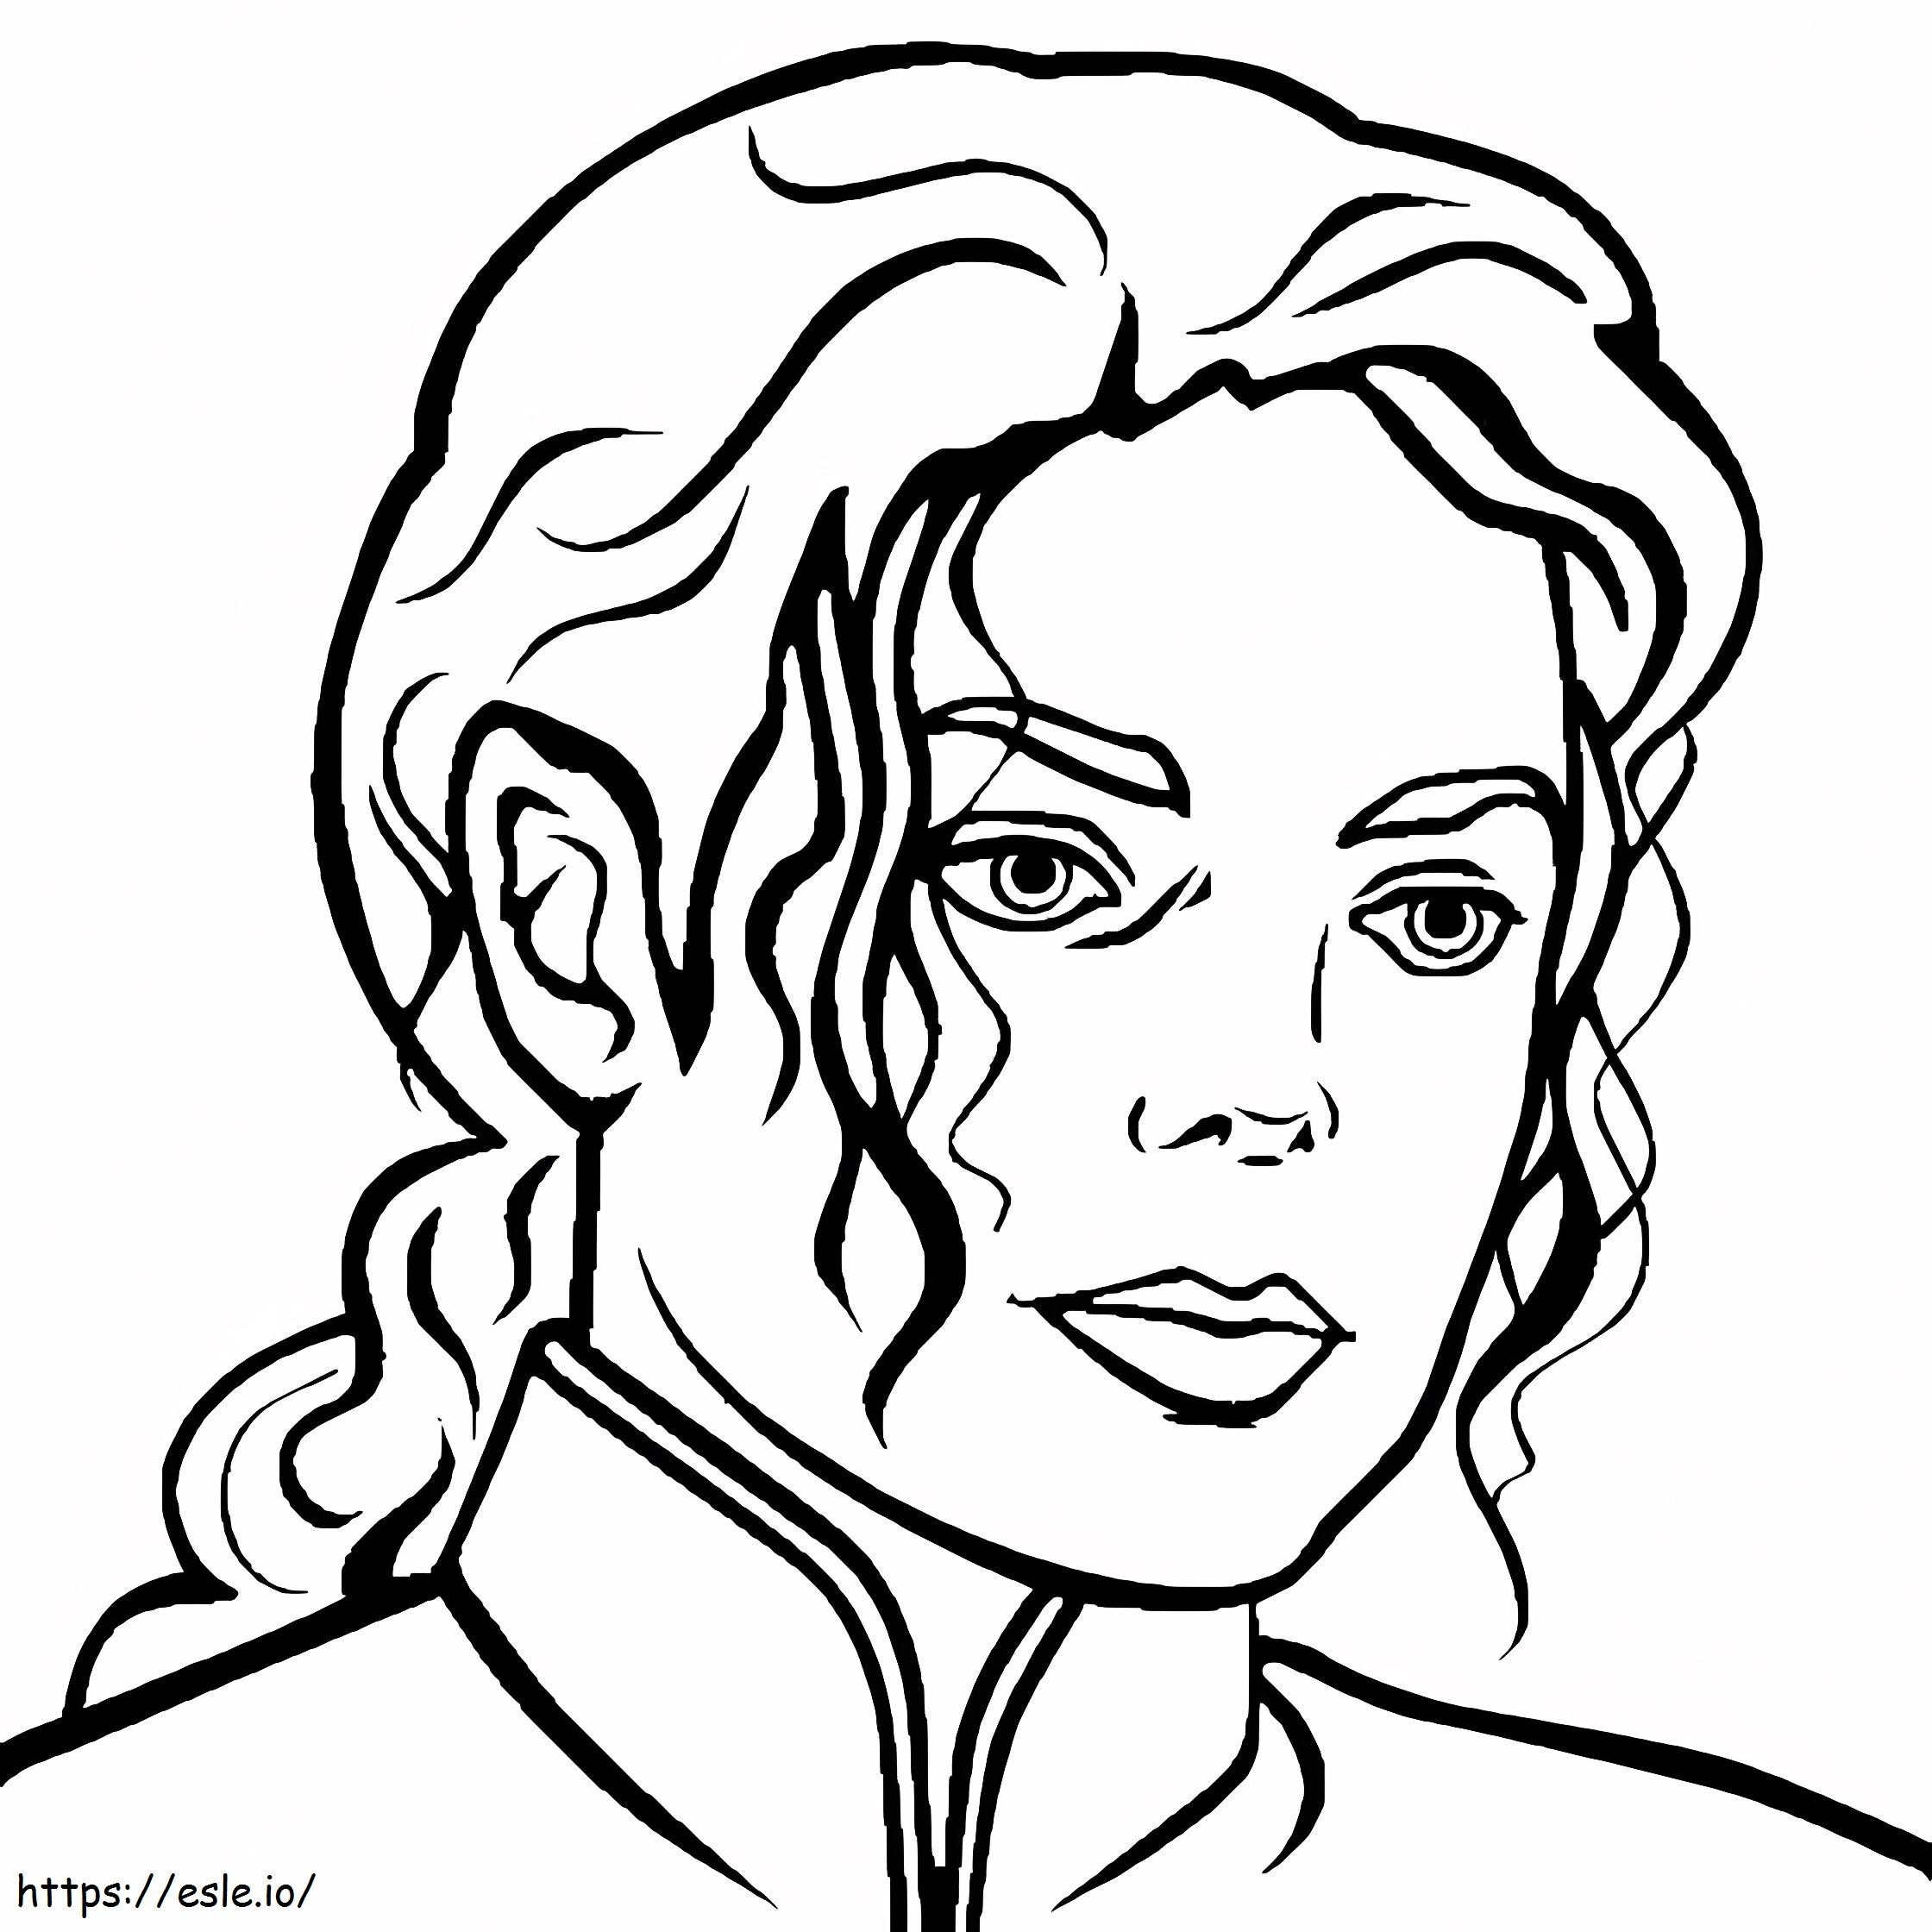 Cara De Michael Jackson ausmalbilder